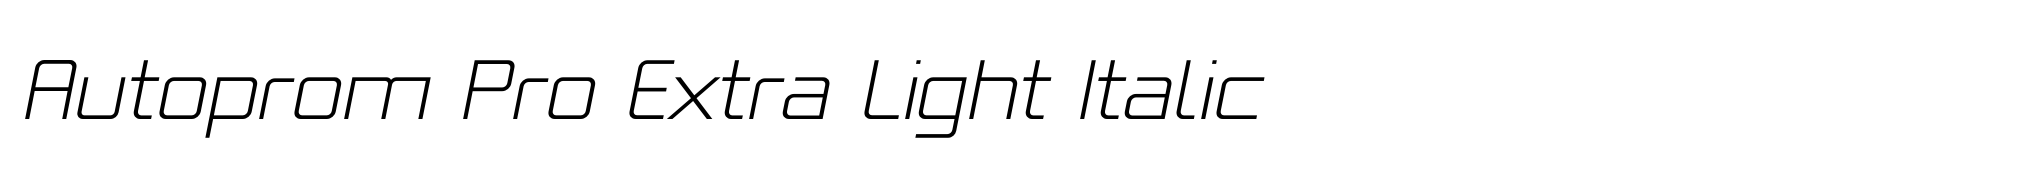 Autoprom Pro Extra Light Italic image